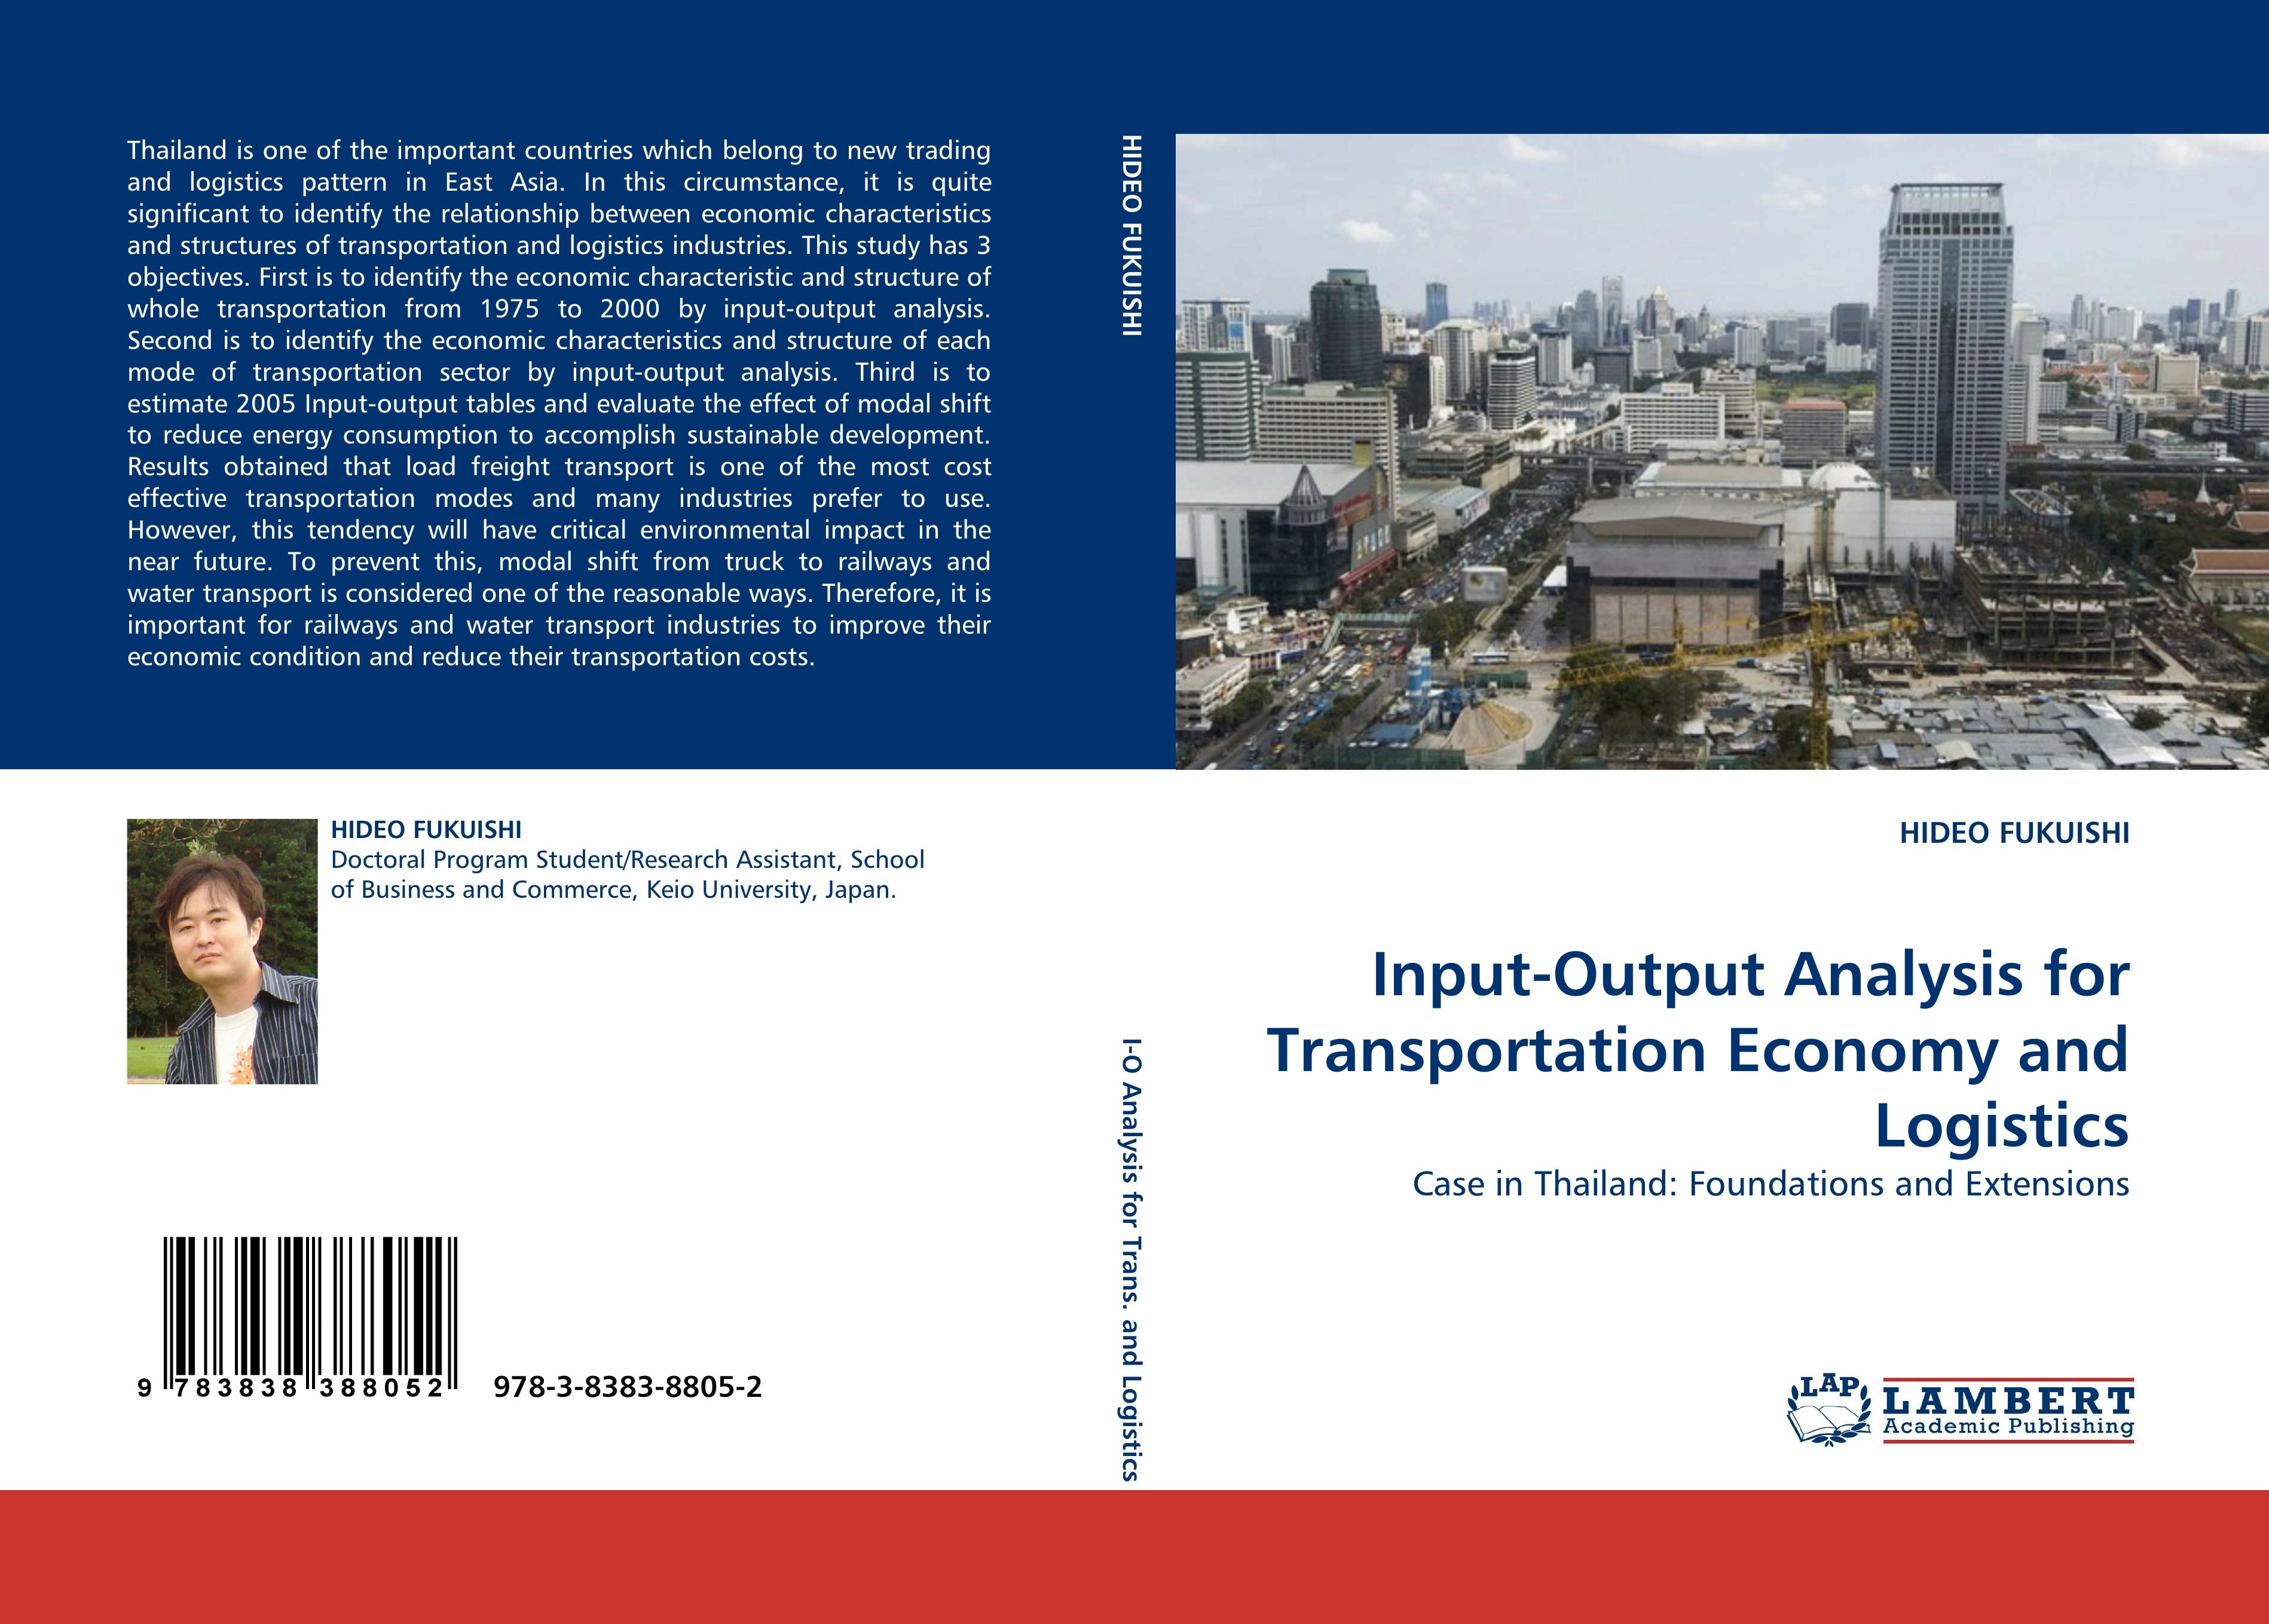 Input-Output Analysis for Transportation Economy and Logistics - HIDEO FUKUISHI